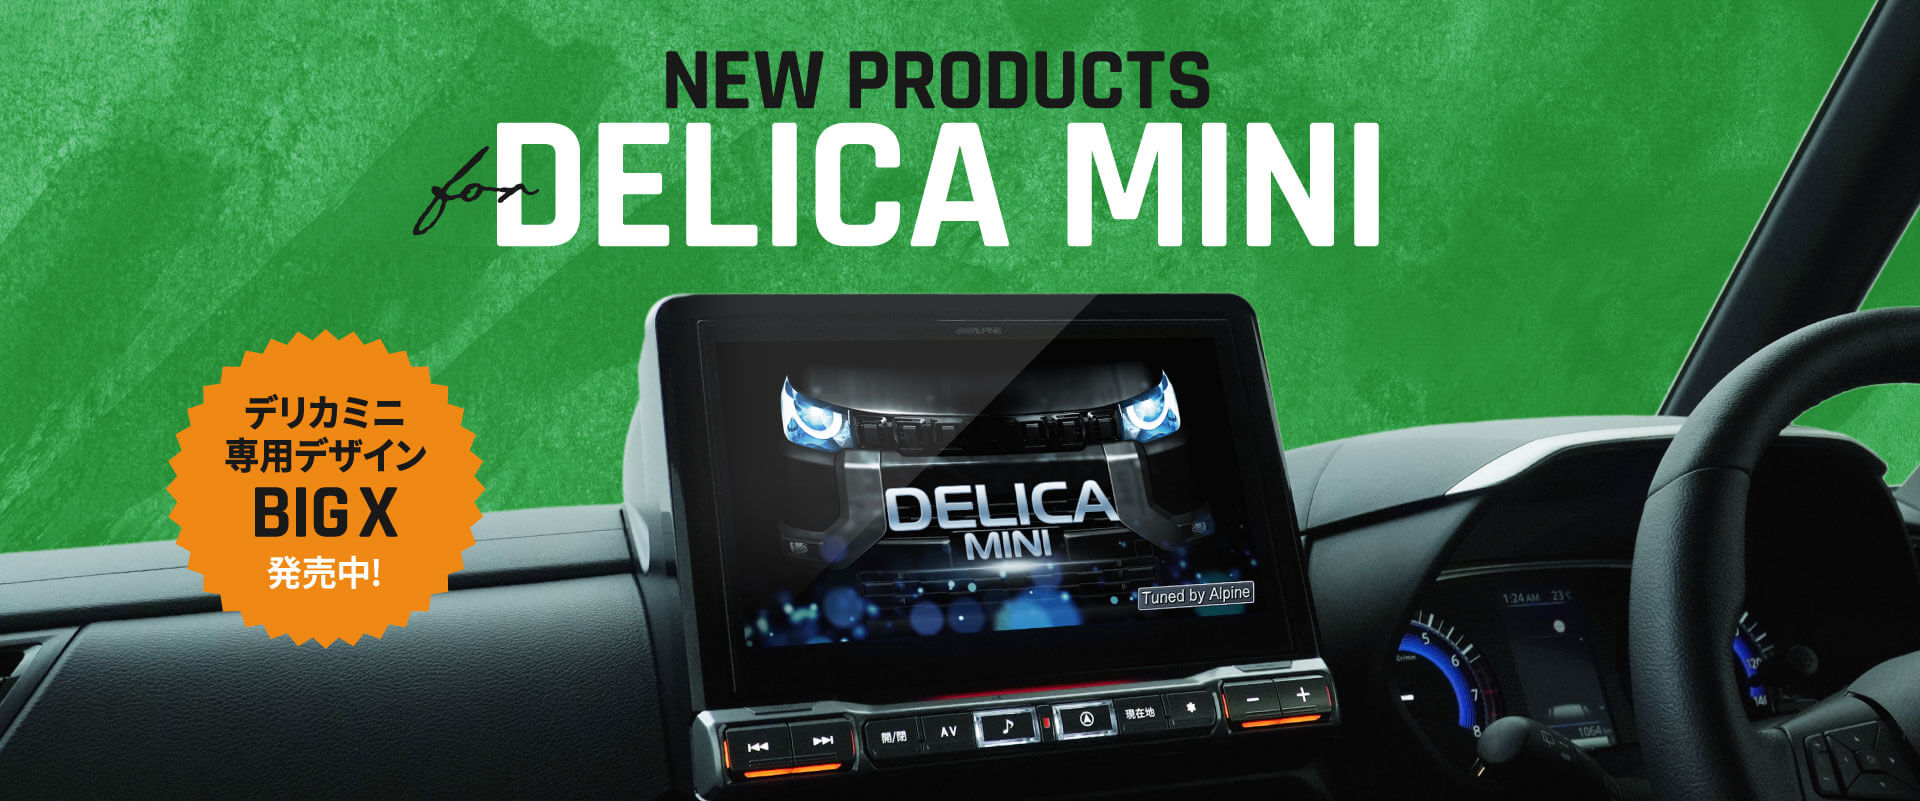 NEW PRODUCTS for DELICA MINI │ アルパイン製品でデリカミニをアップデート デリカミニ専用デザイン BIG X 発売中！